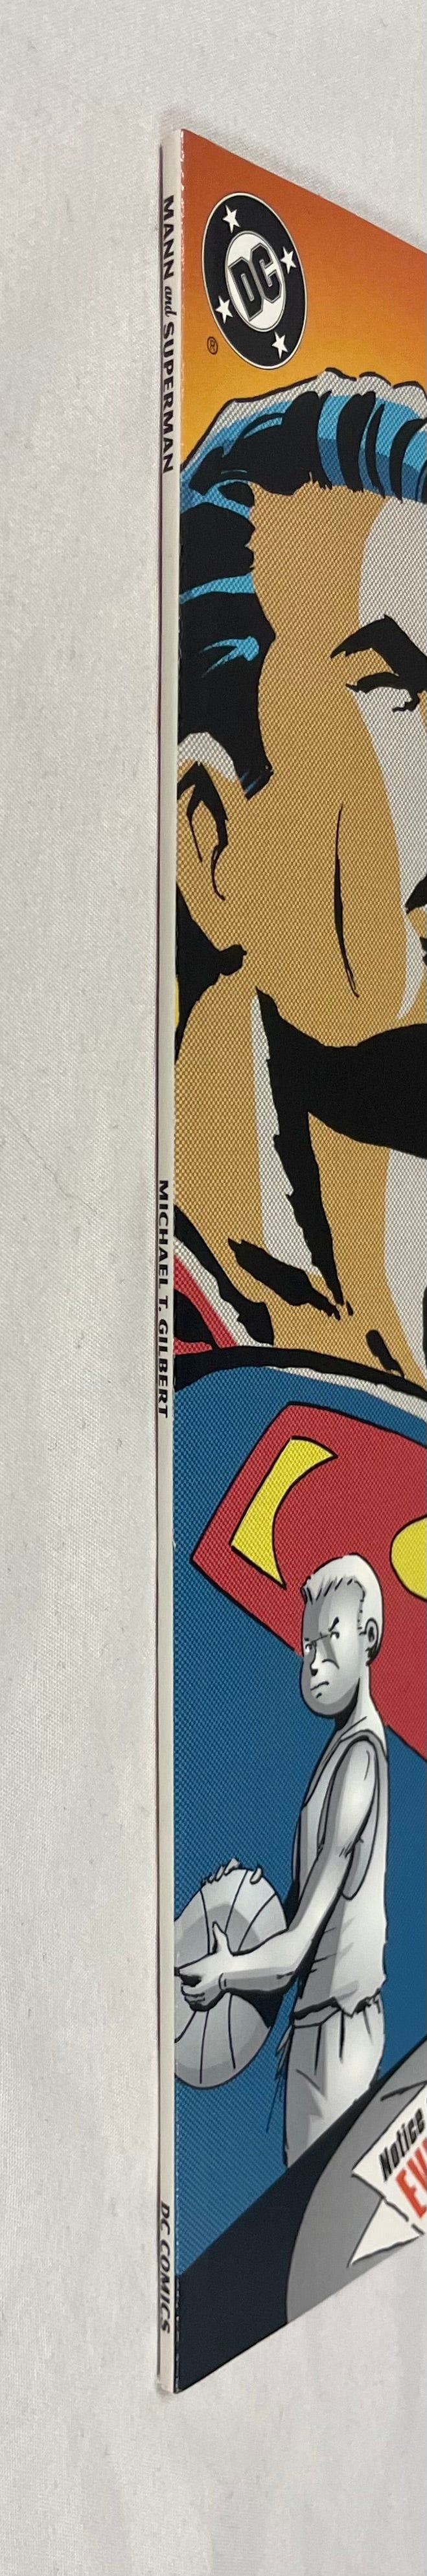 DC Comics Mann and Superman No. 1 (One shot)